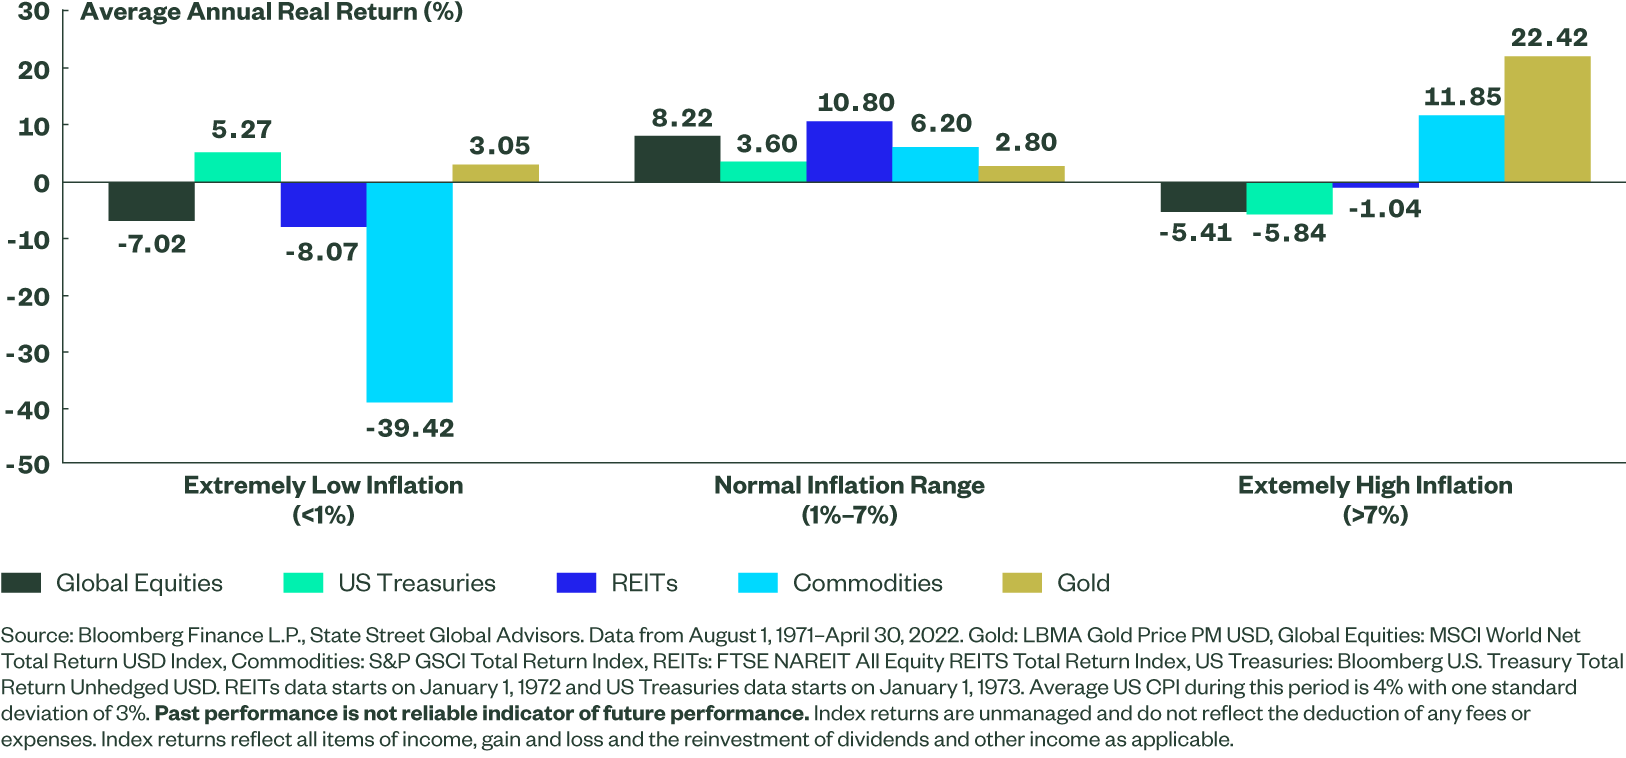 Performance Based on Inflation Regimes